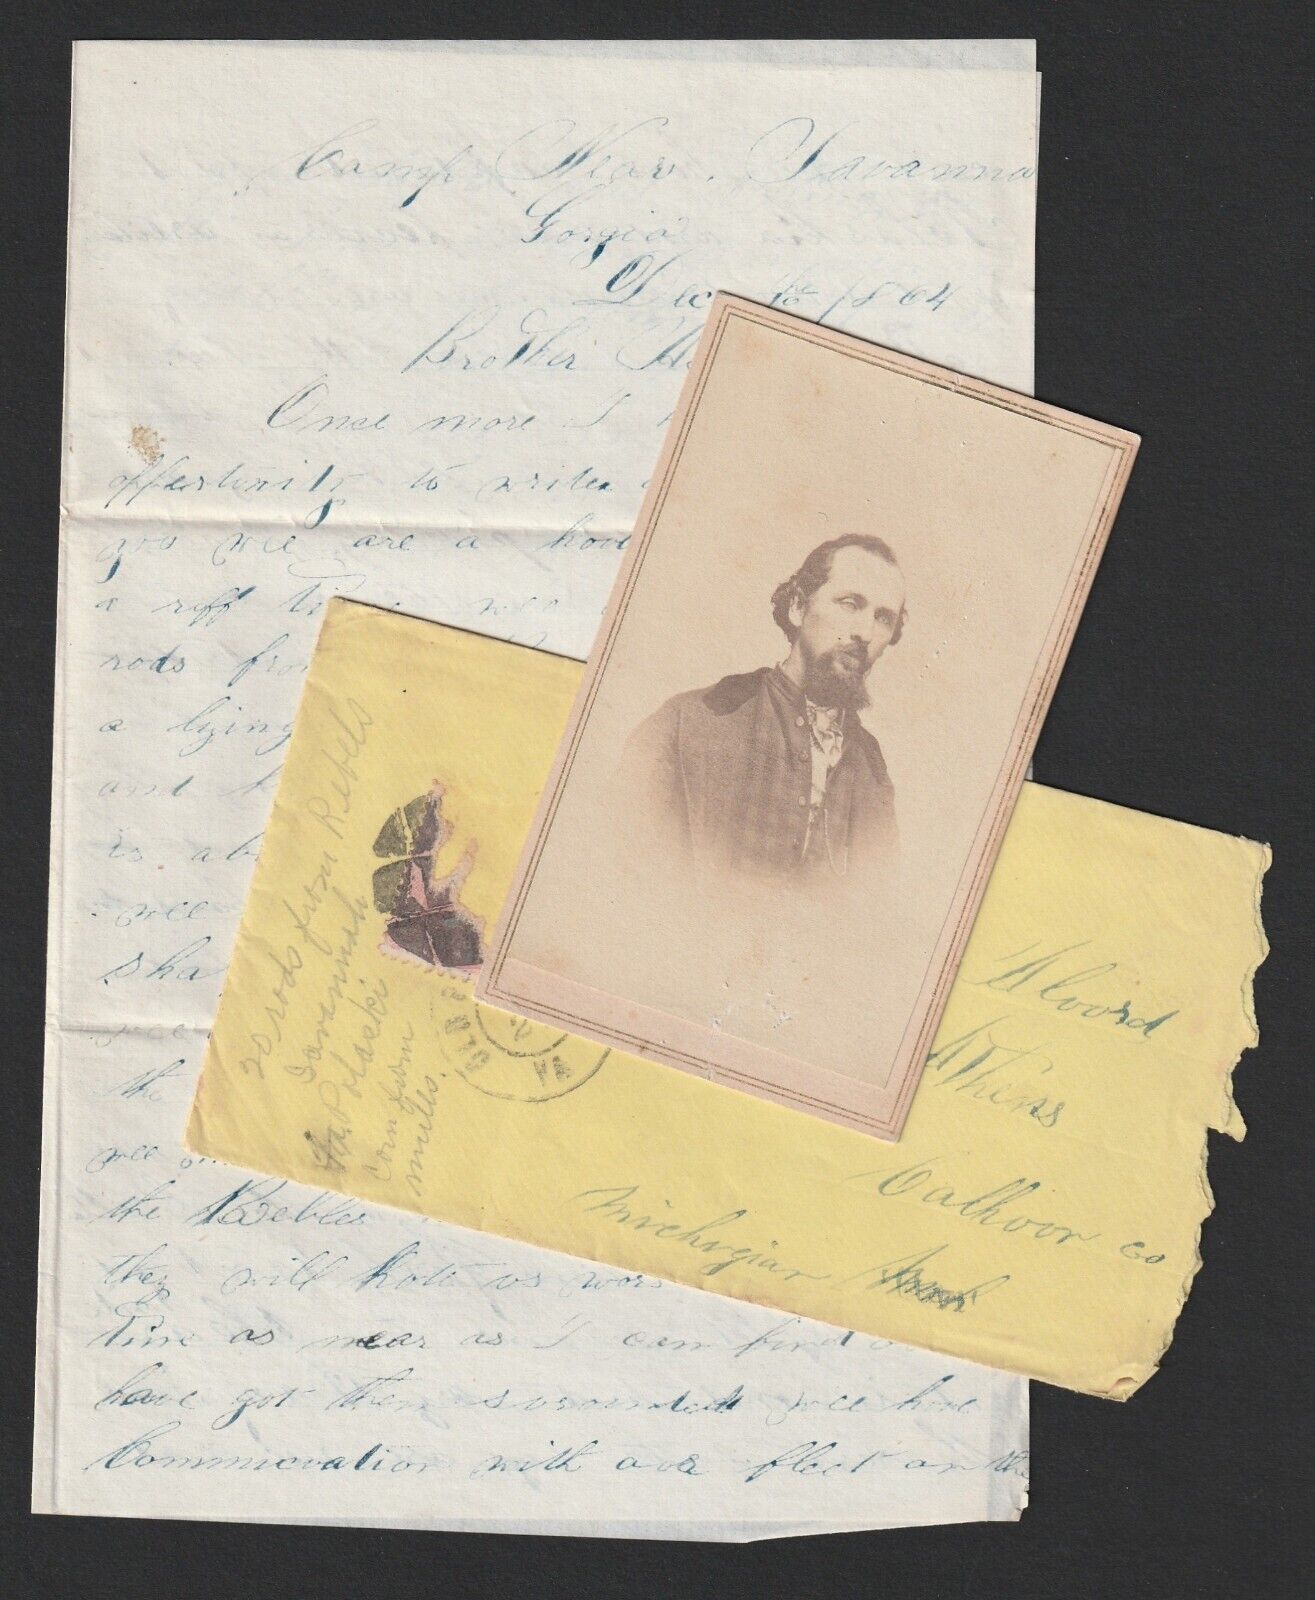 RARE Civil War Letter & Photo- IDd Soldier to Brother 1864 Savannah GA 13th MIch